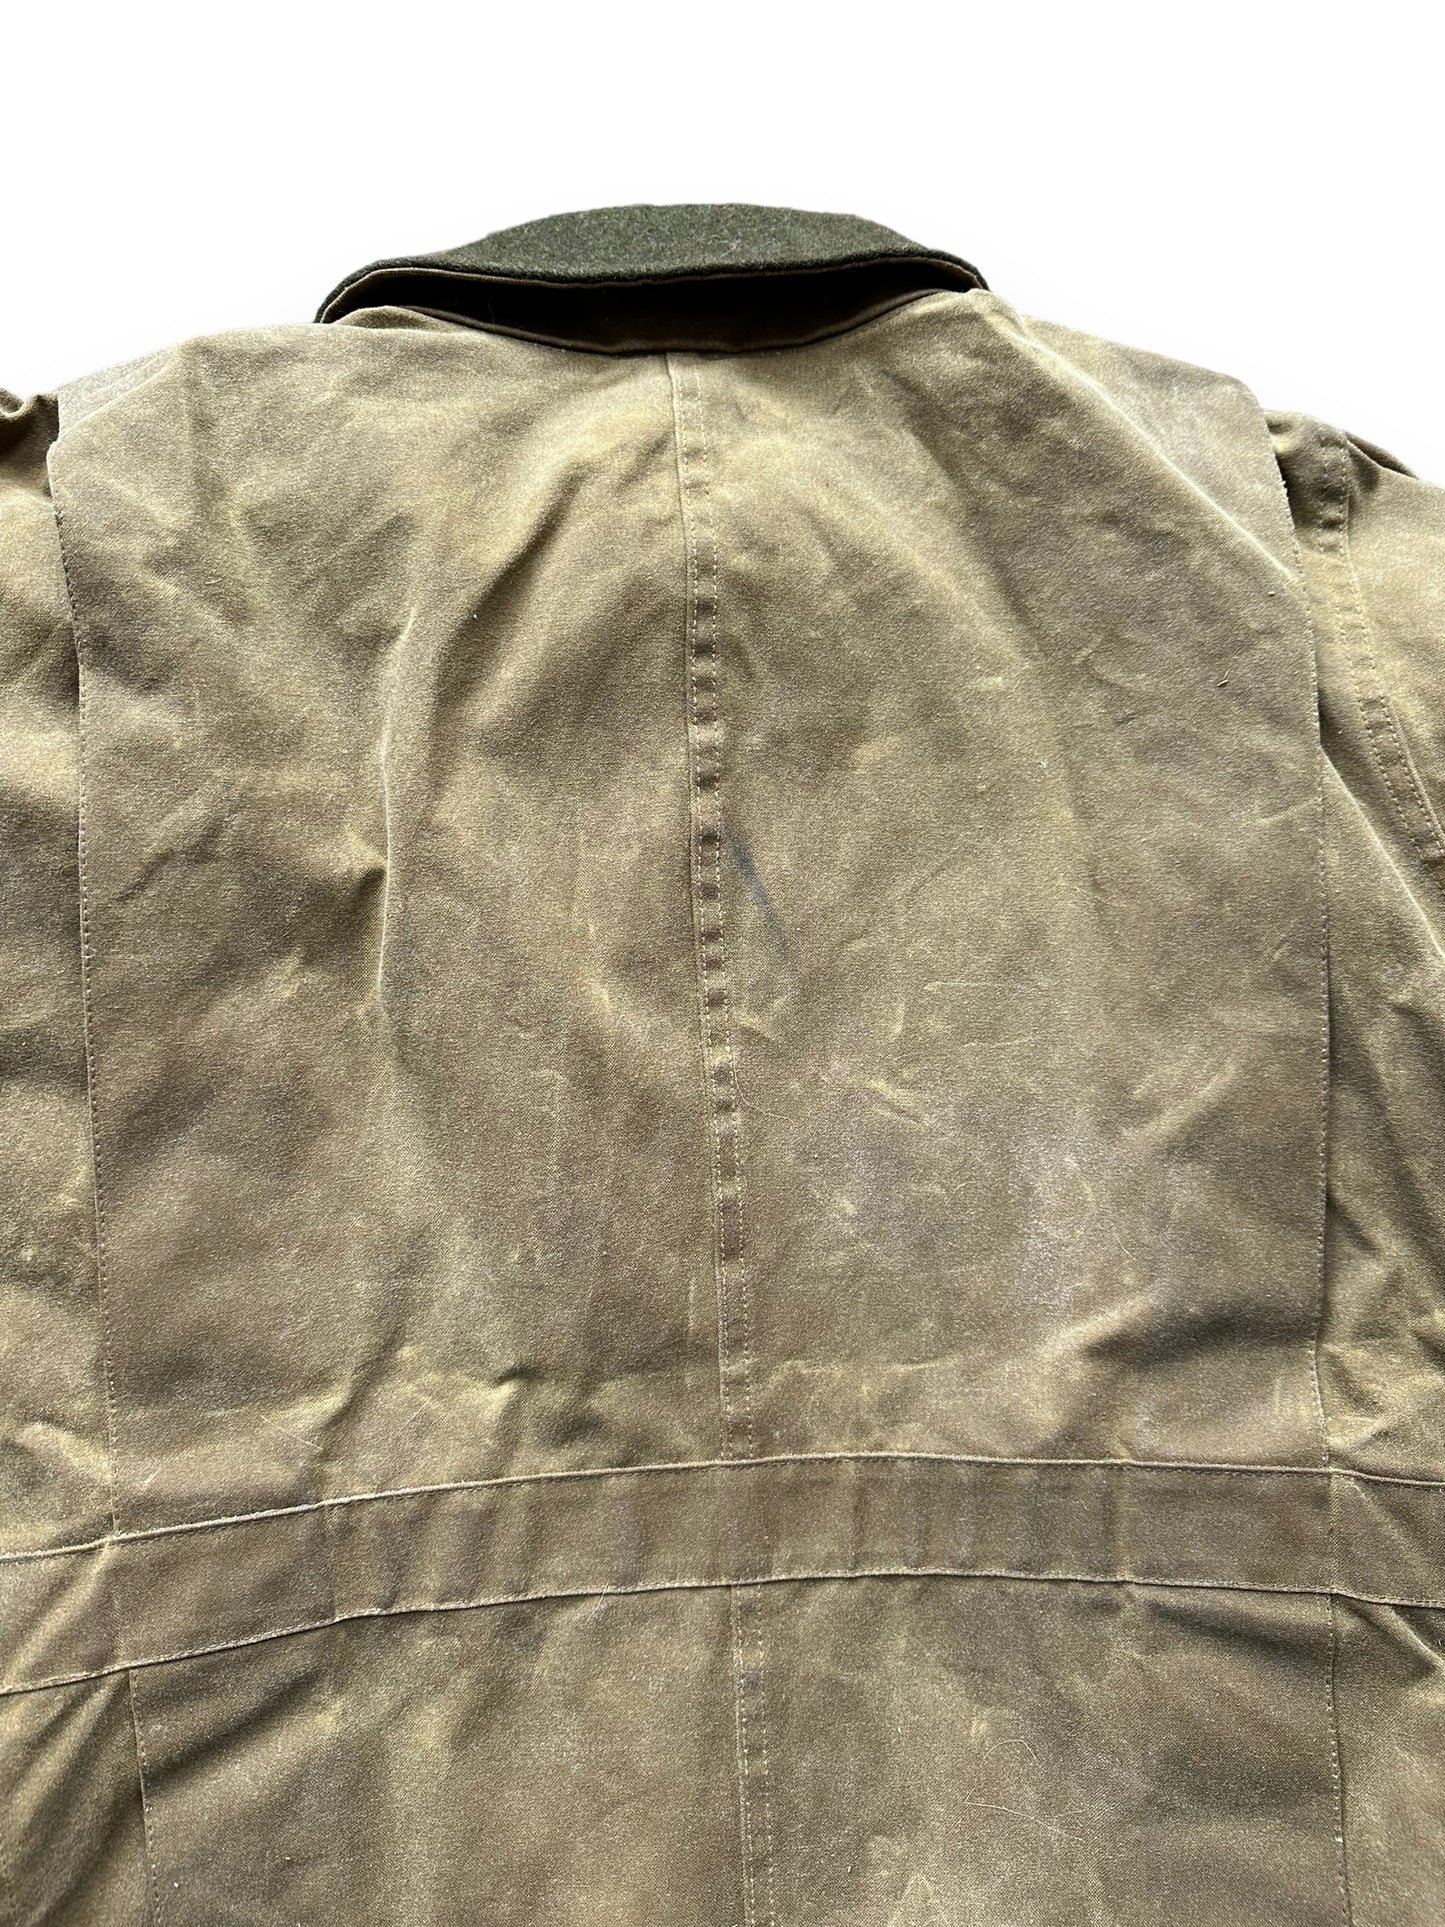 Upper Rear View with Small Blemish on Filson Tin Cloth Jacket SZ XL |  Barn Owl Vintage Goods | Filson Workwear Seattle